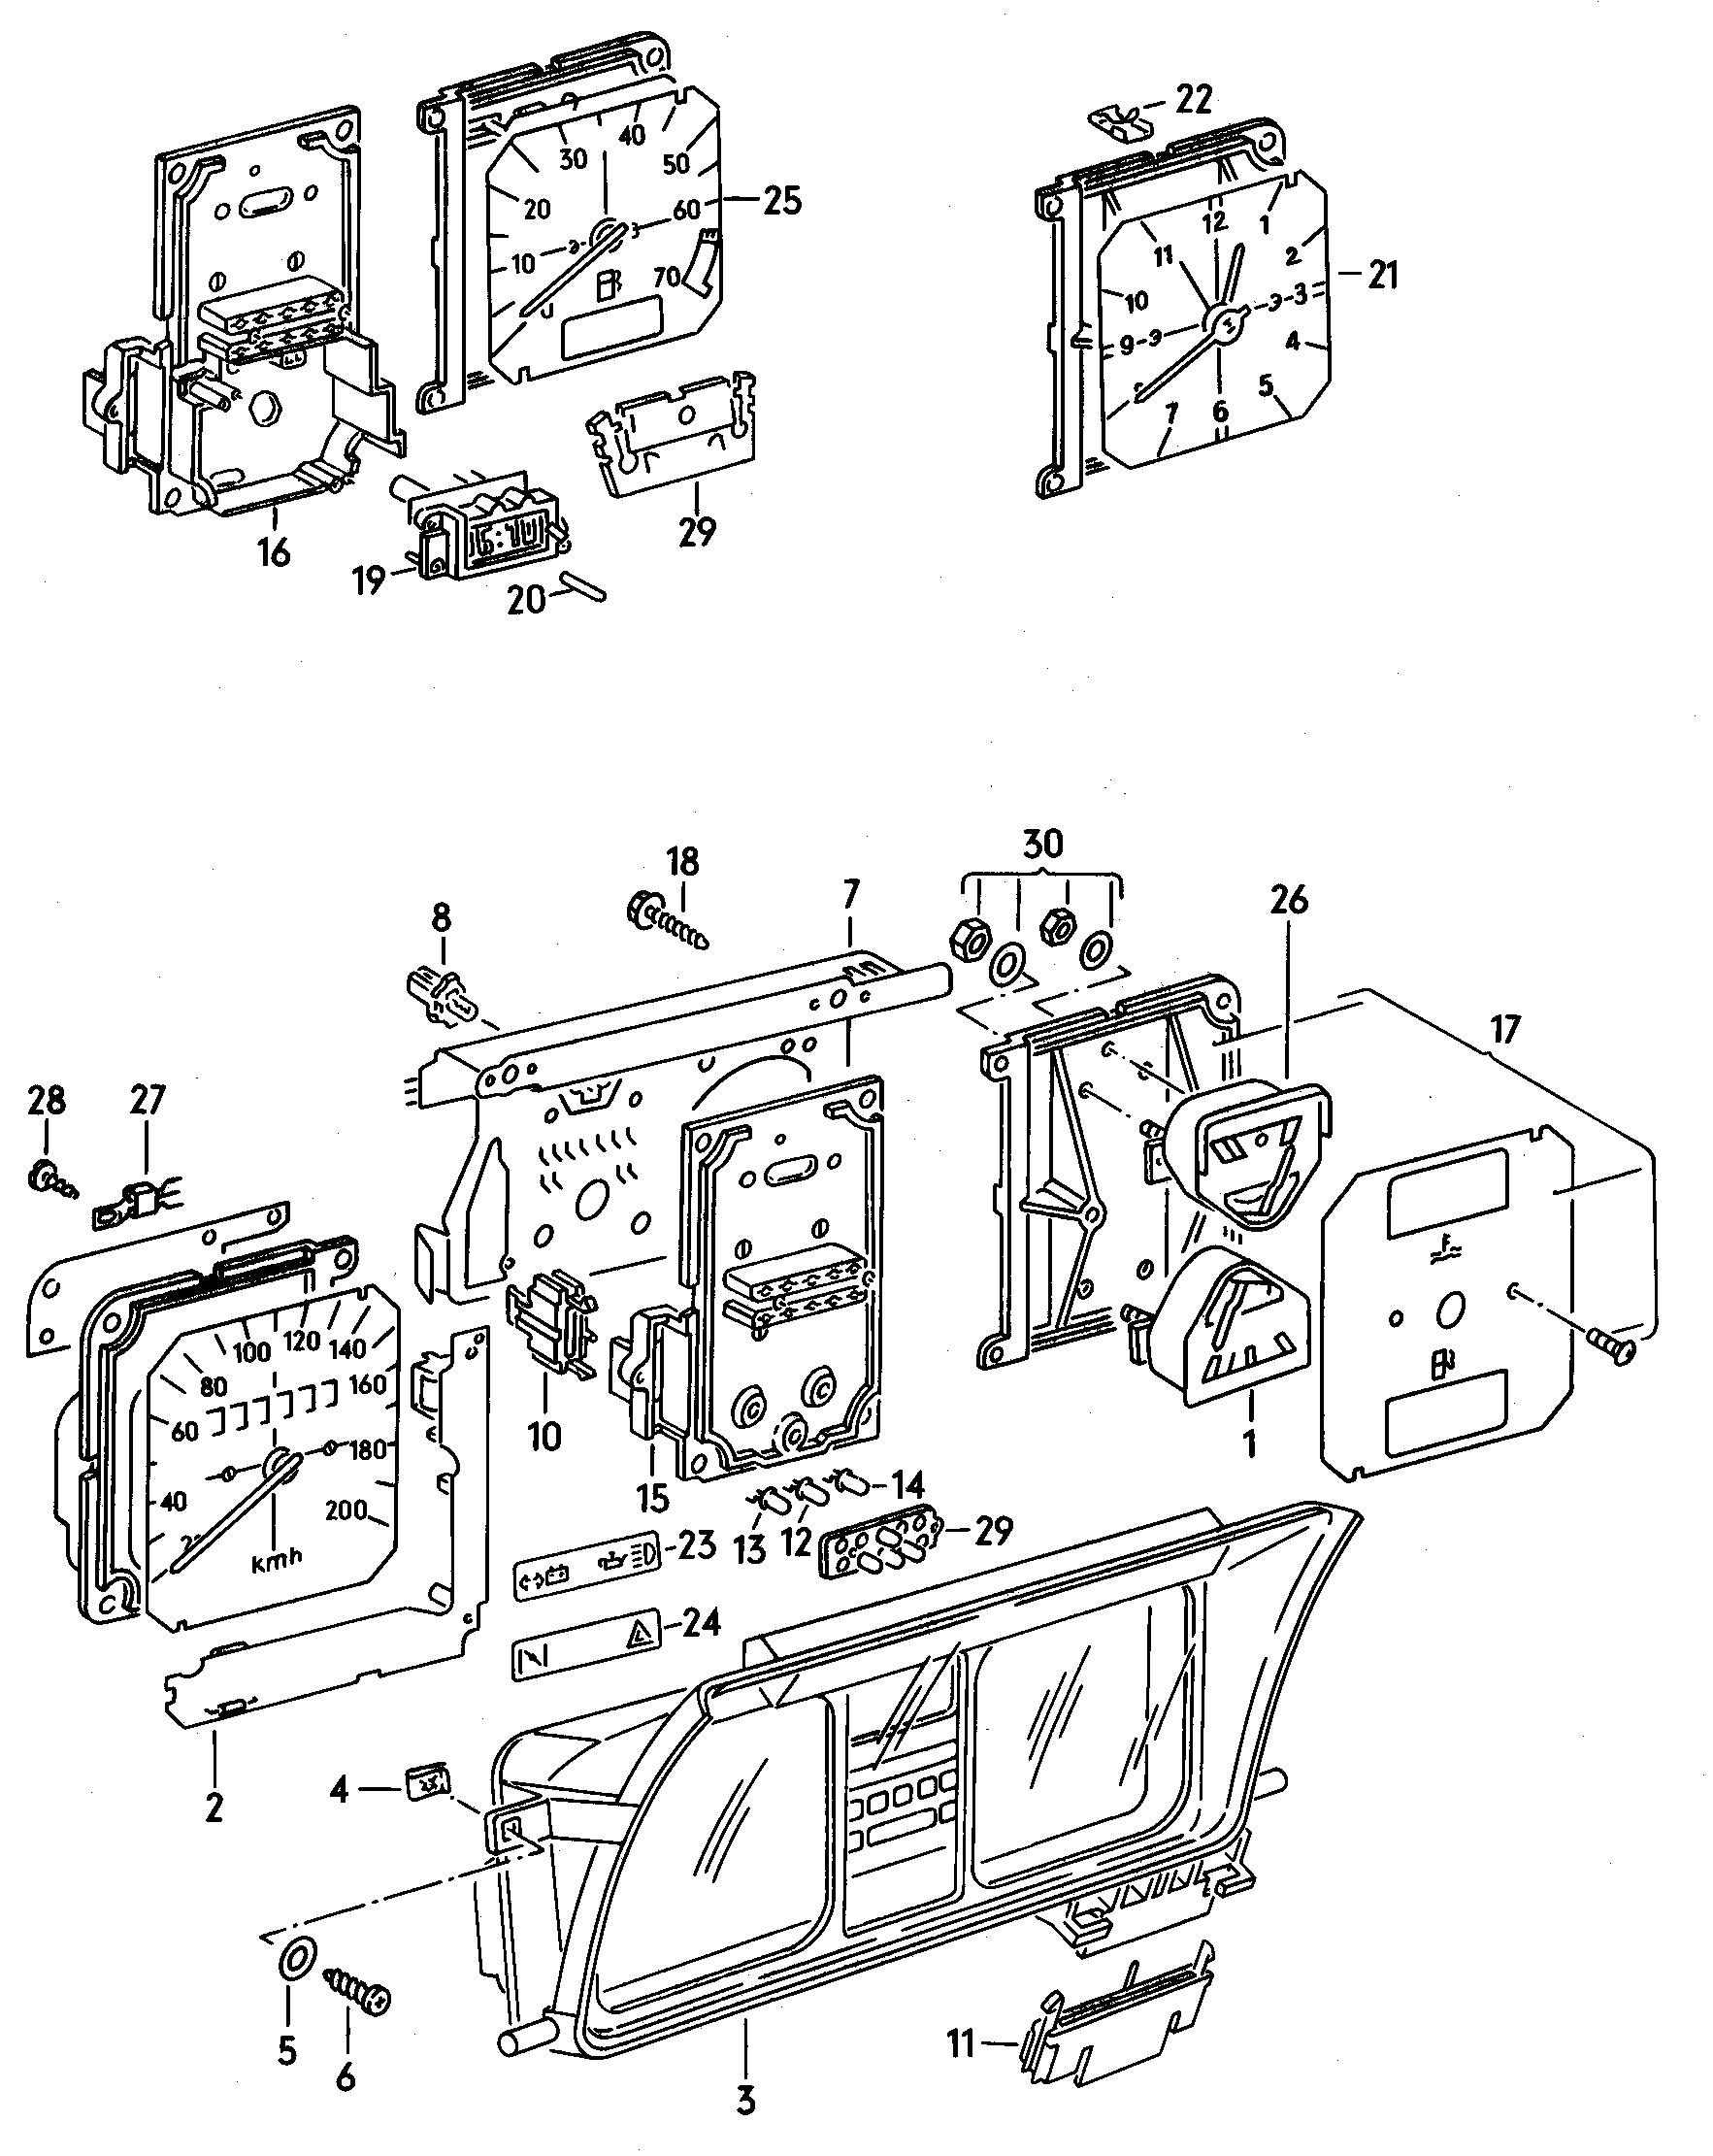 Instrument housingFuel gaugetemperature gaugeConductor foil  - Caddy - ca